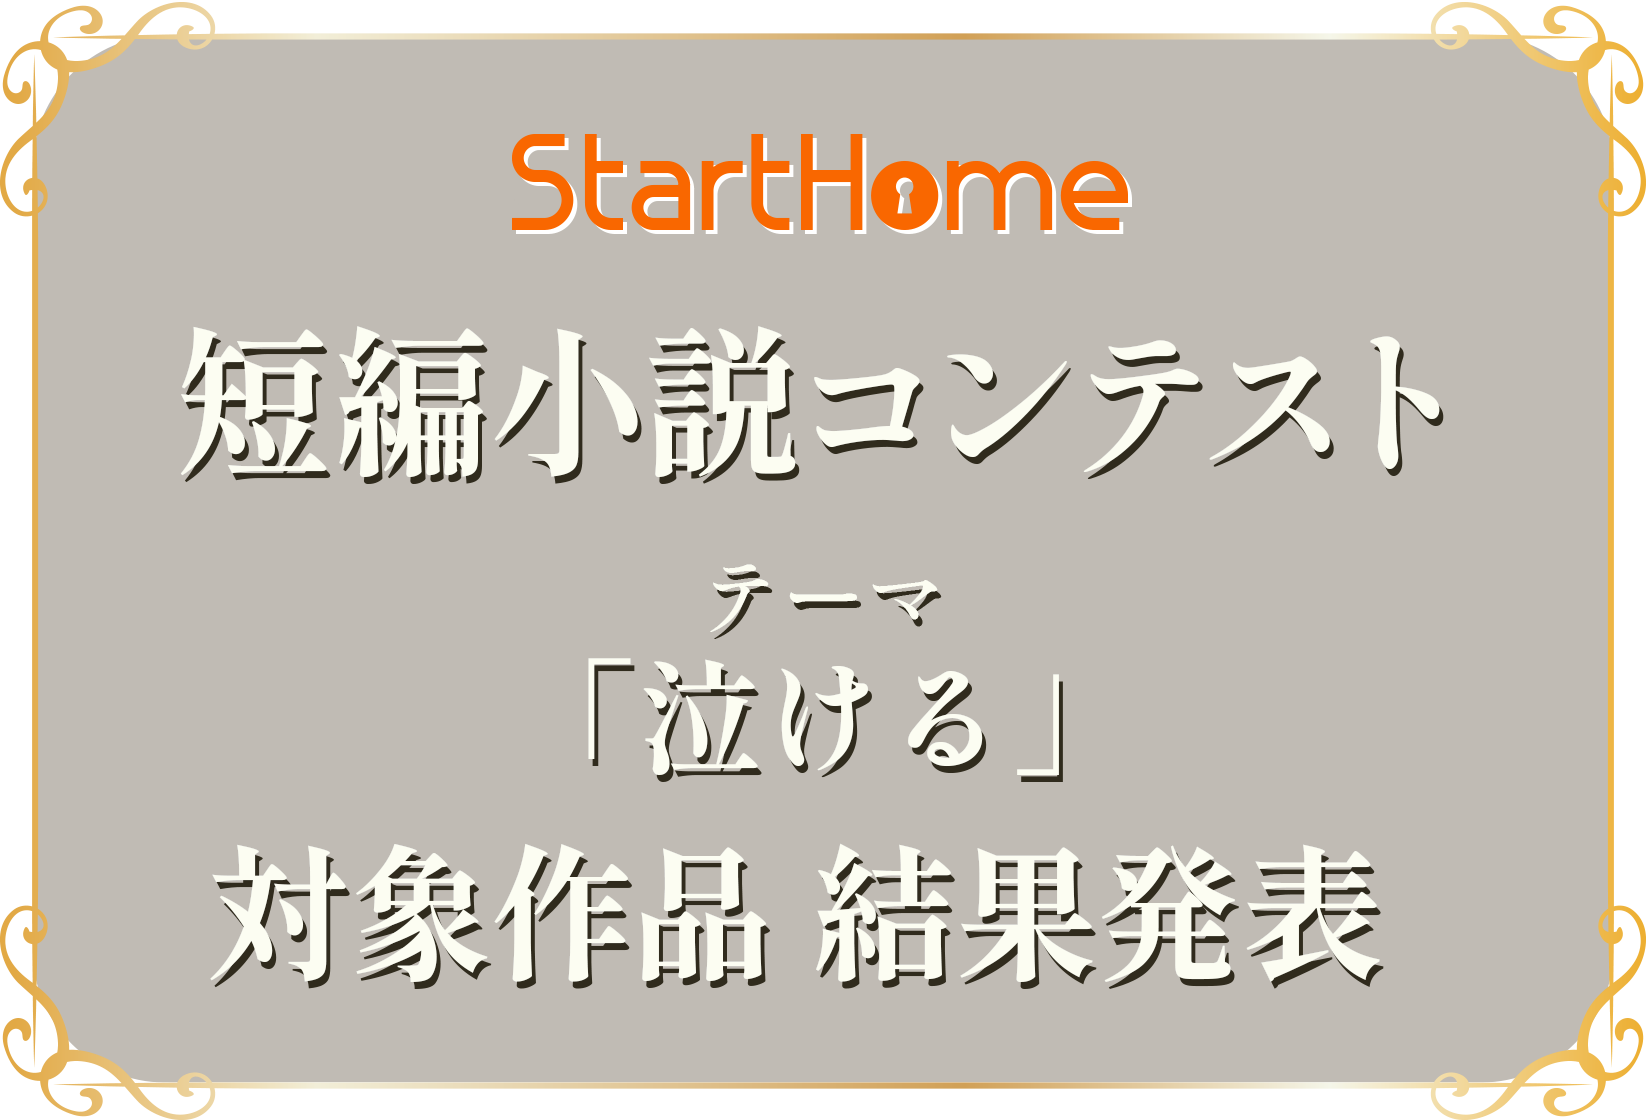 StartHome